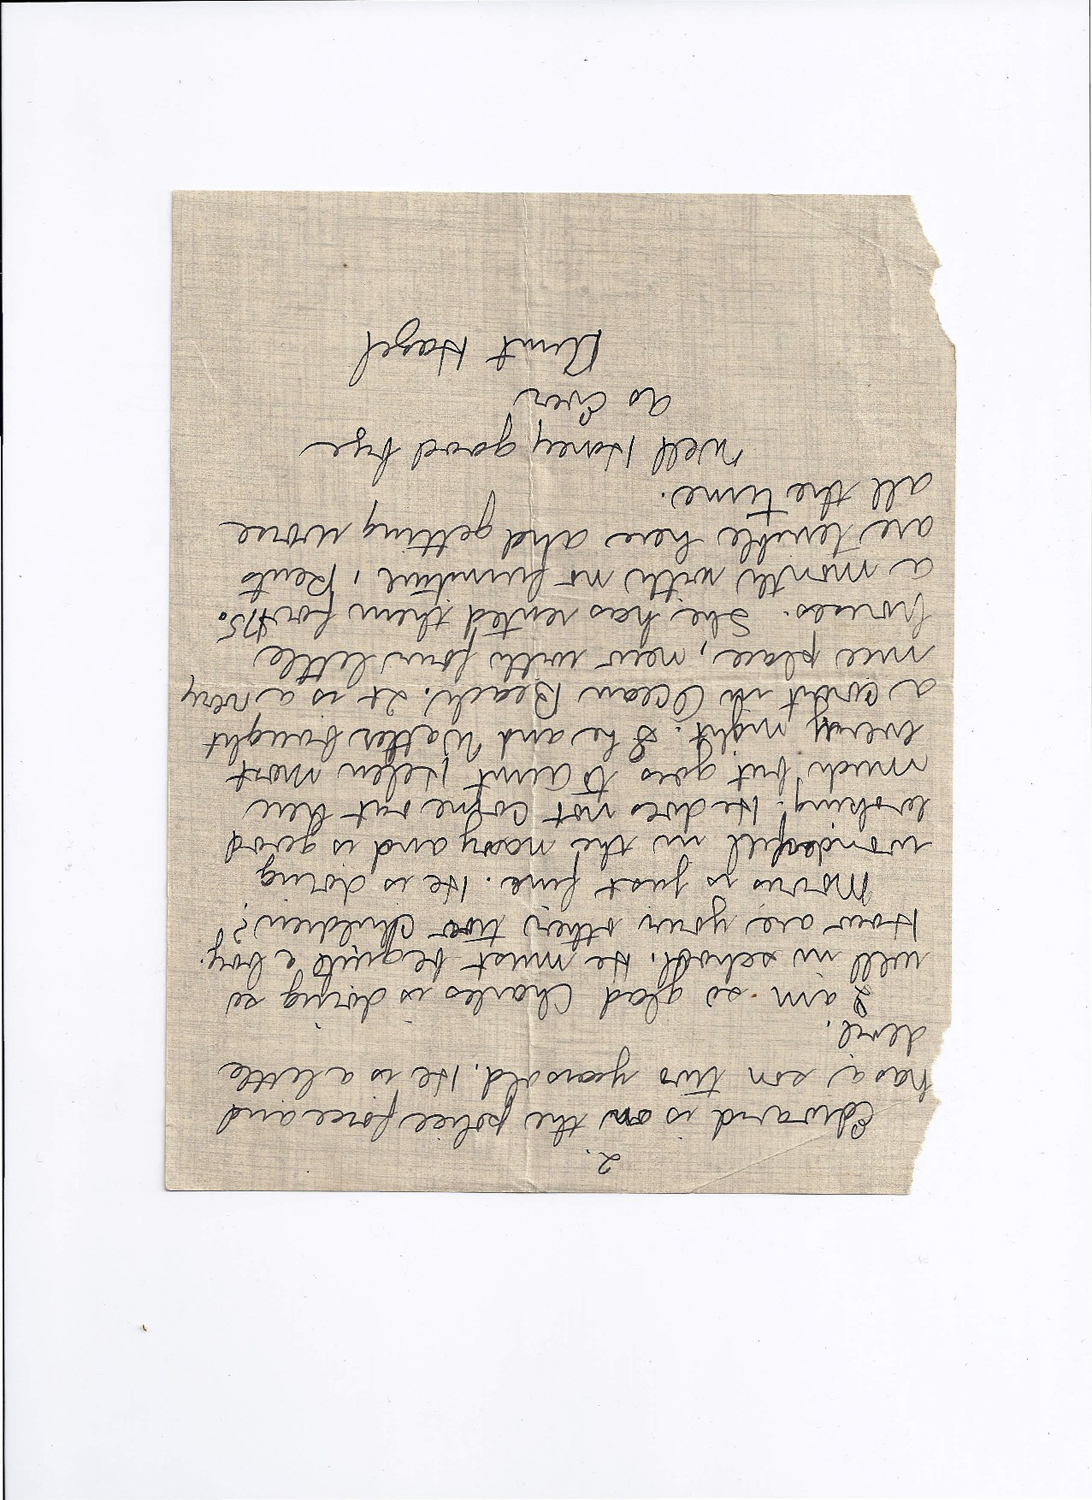 elizabeths_aunt_hazels_letter_1948_page_2